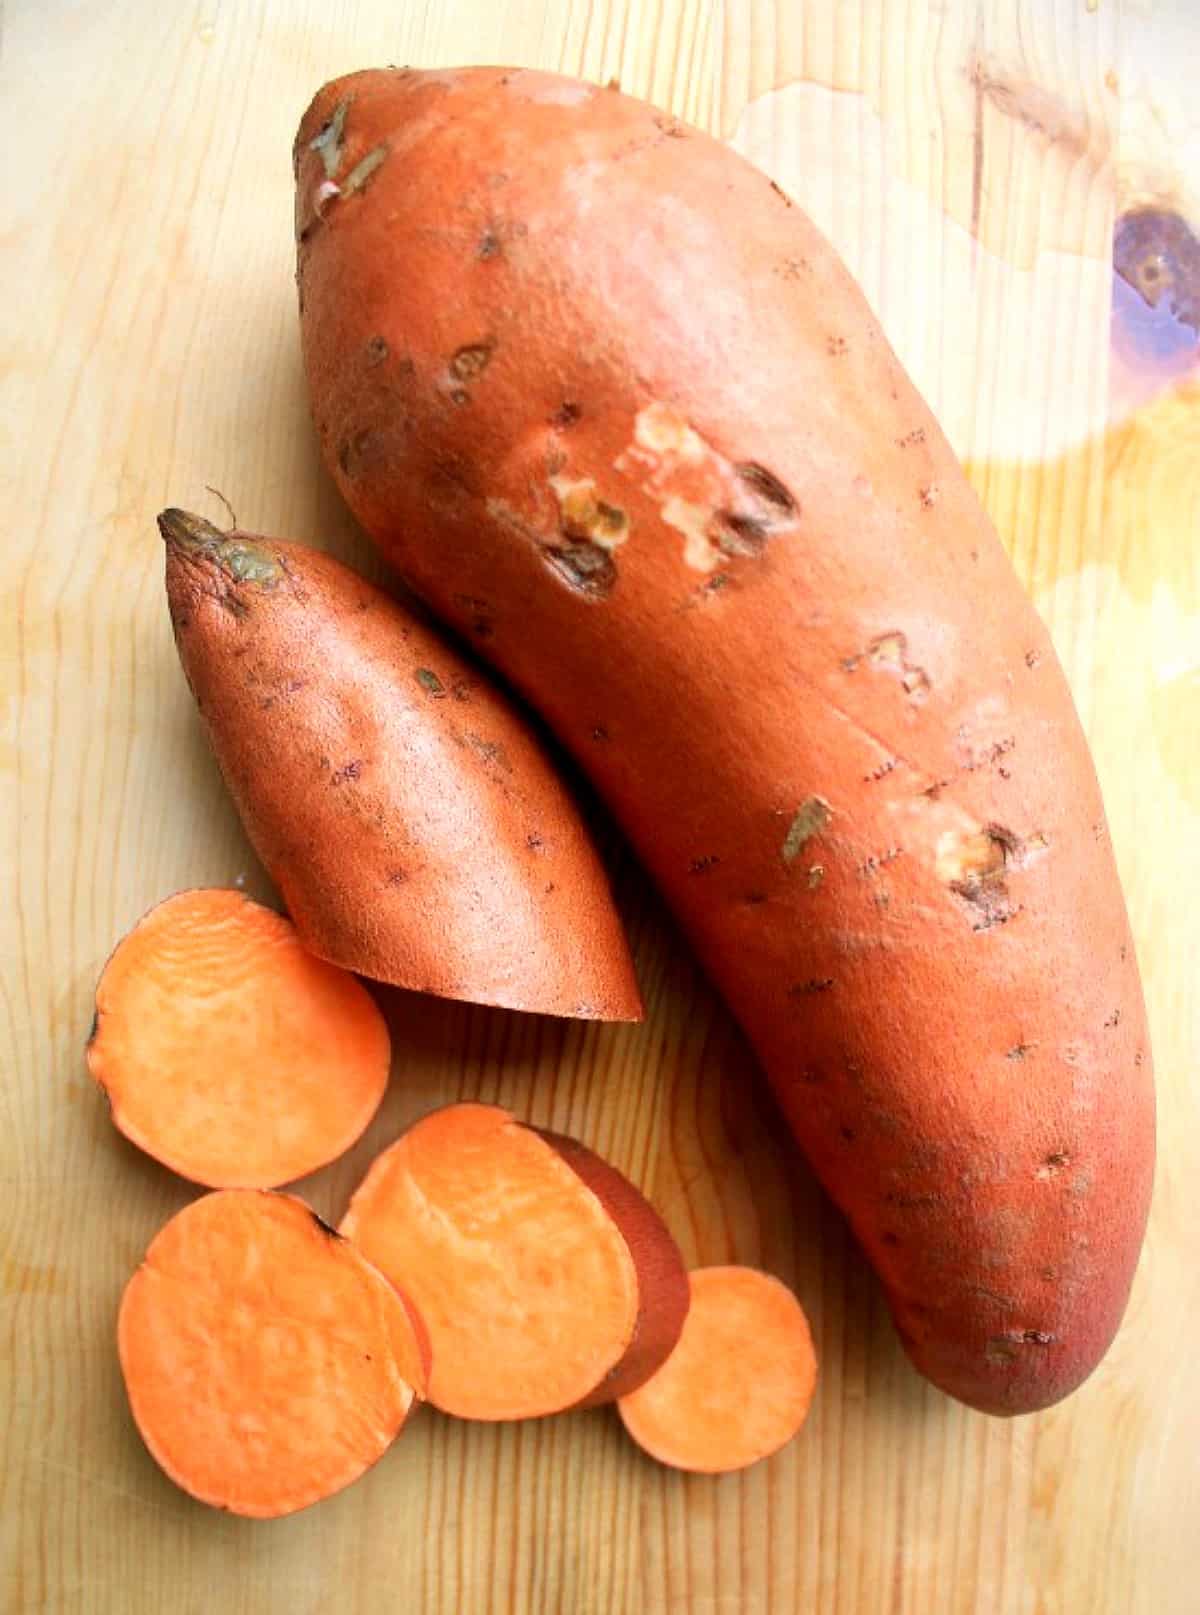 A large sweet potatoes next to sliced sweet potatoes.